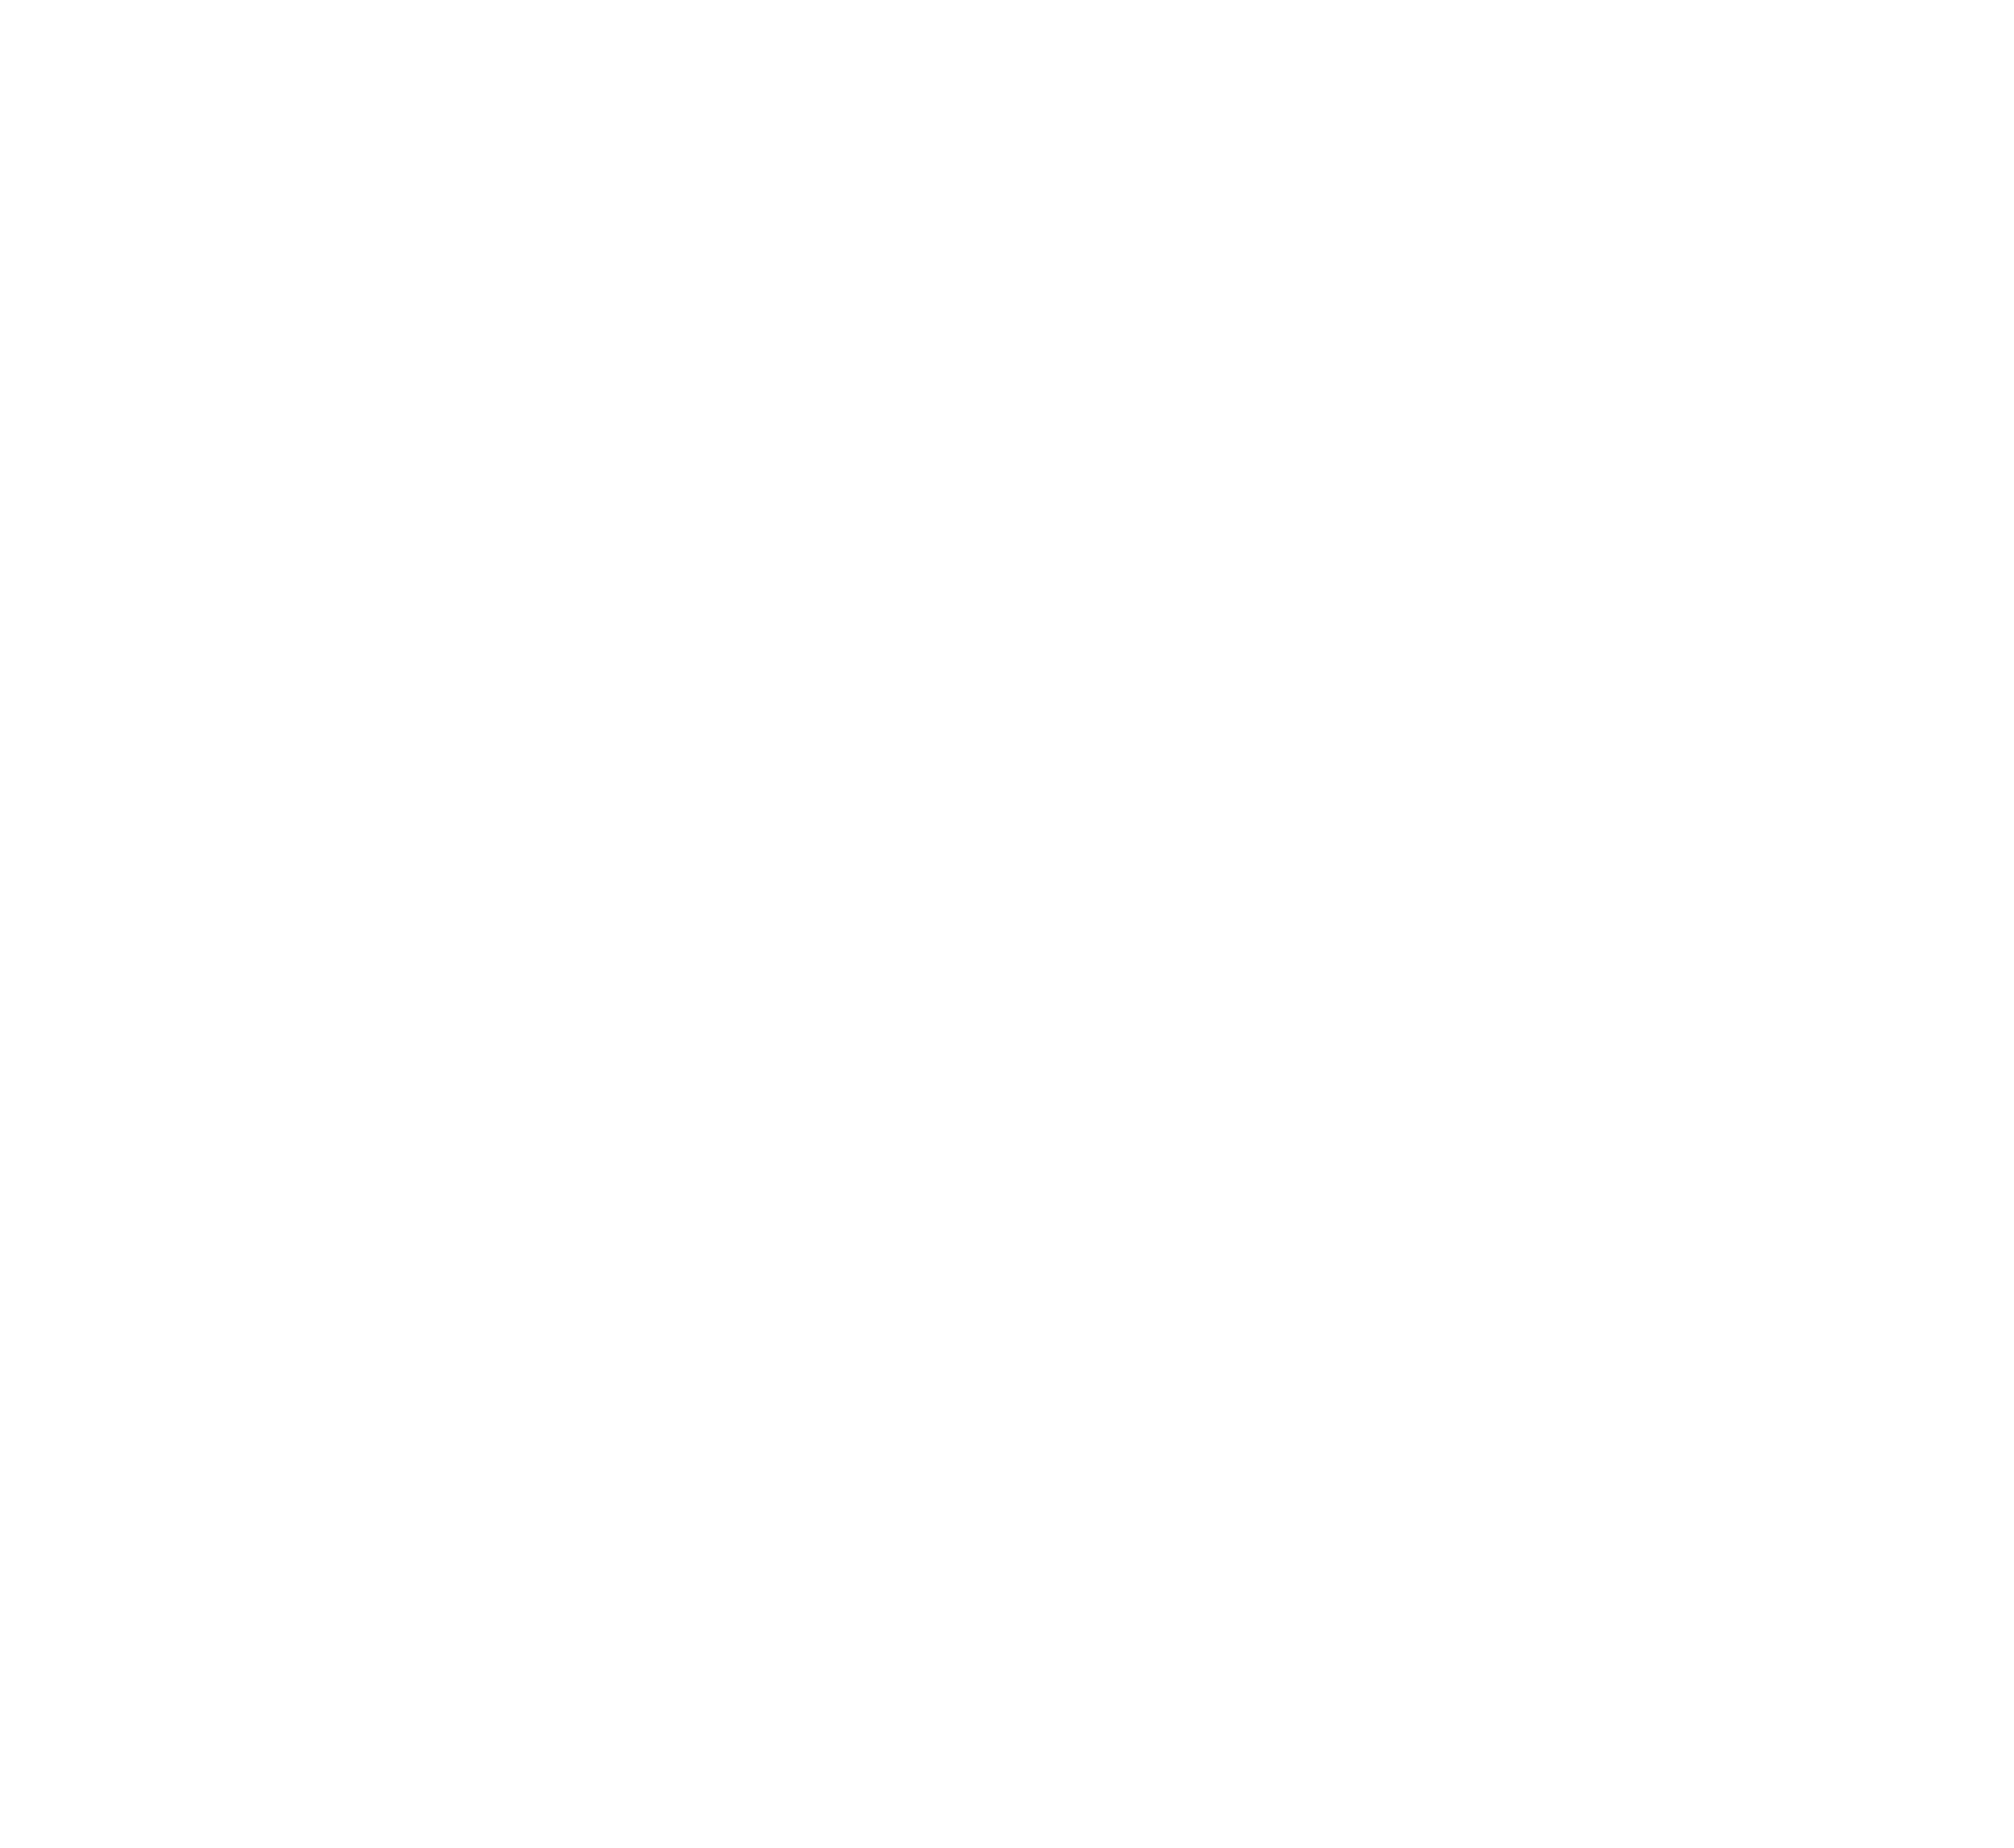 brac university thesis project list